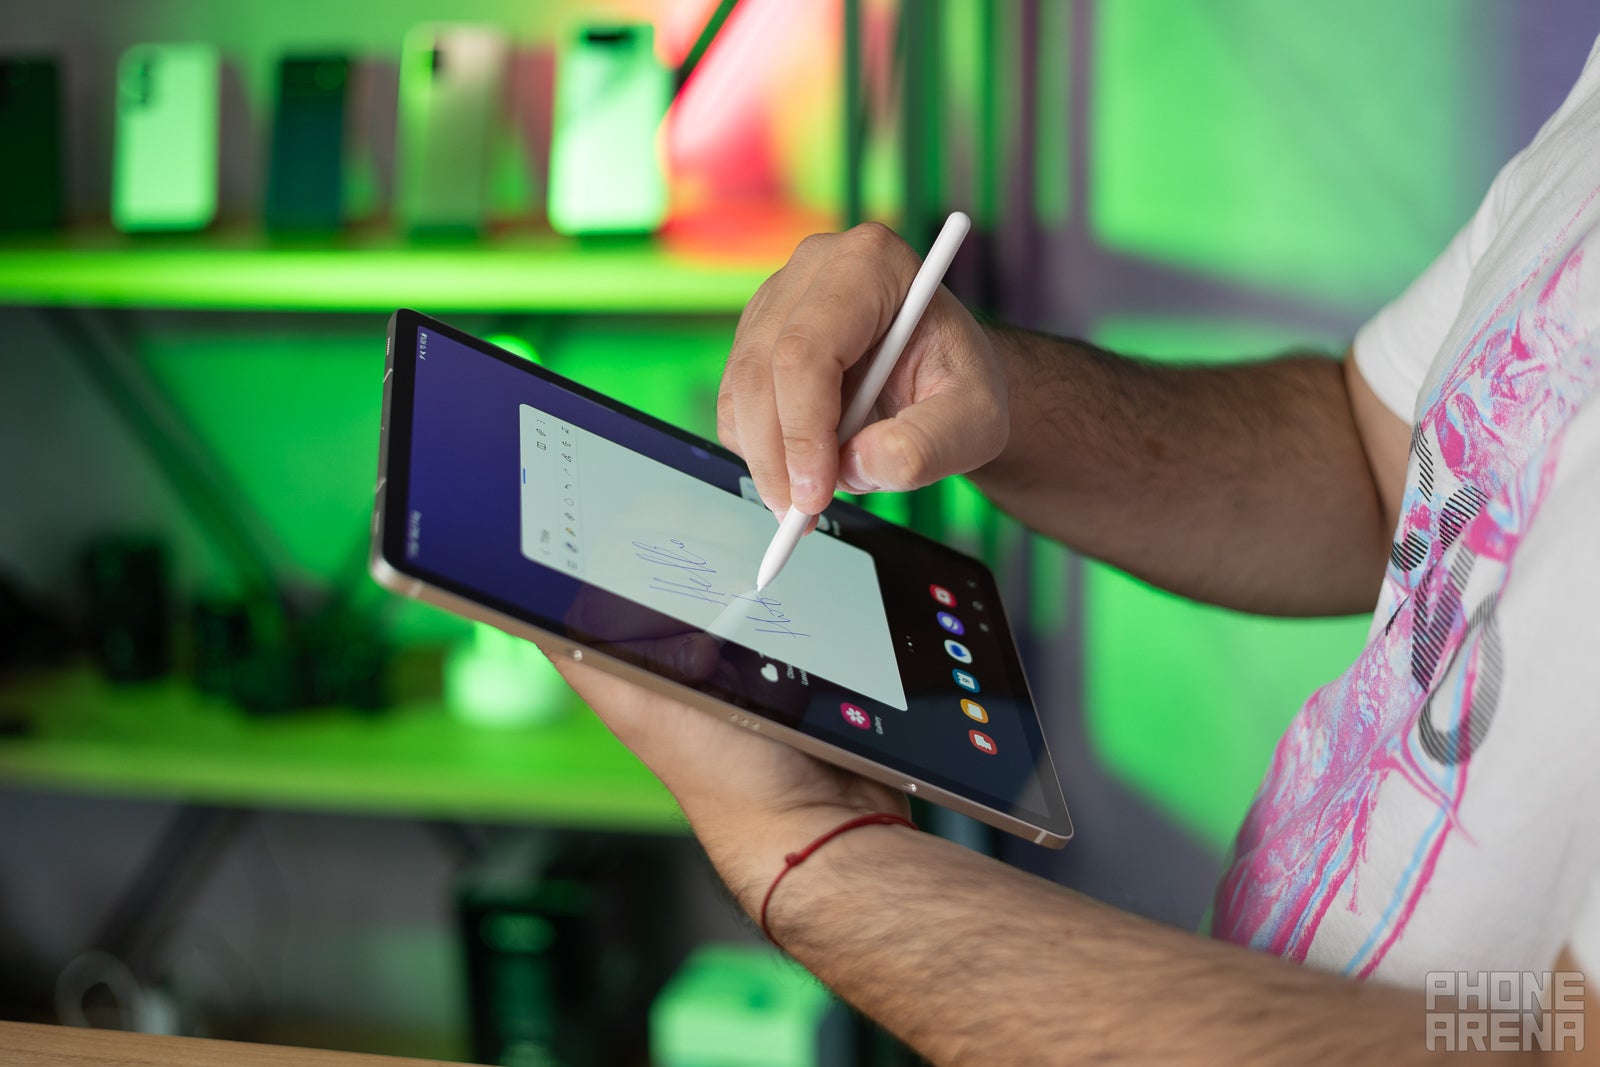 Samsung Tablette Galaxy S9, 11,0 po 128 Go avec S-Pen